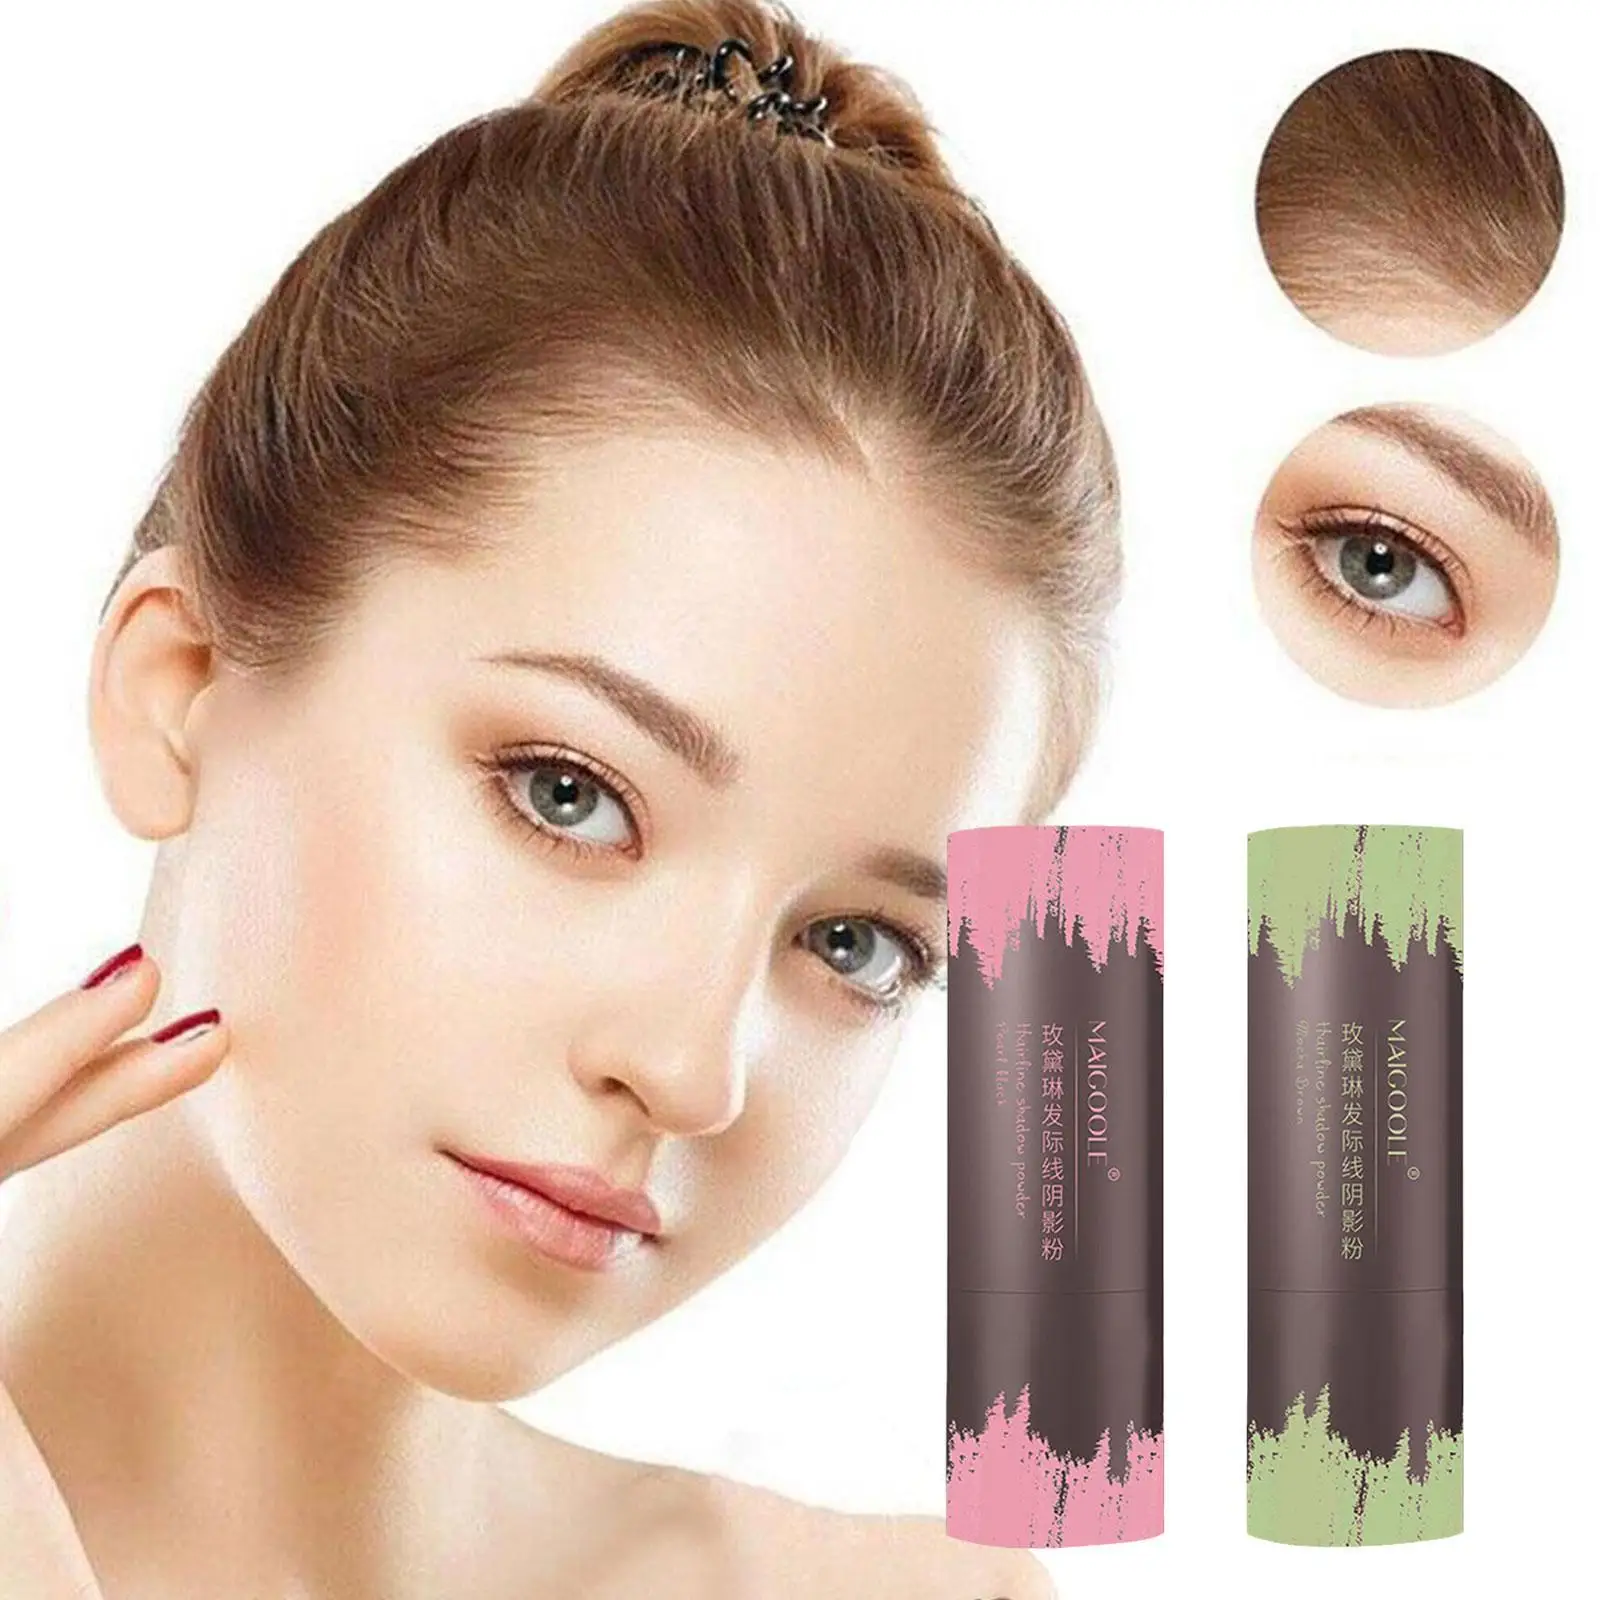 Hairline Filler Hairline Shadow Powder Makeup Hair Concealer Natural Coverage For Fuller Hair Waterproof And Sweatproof